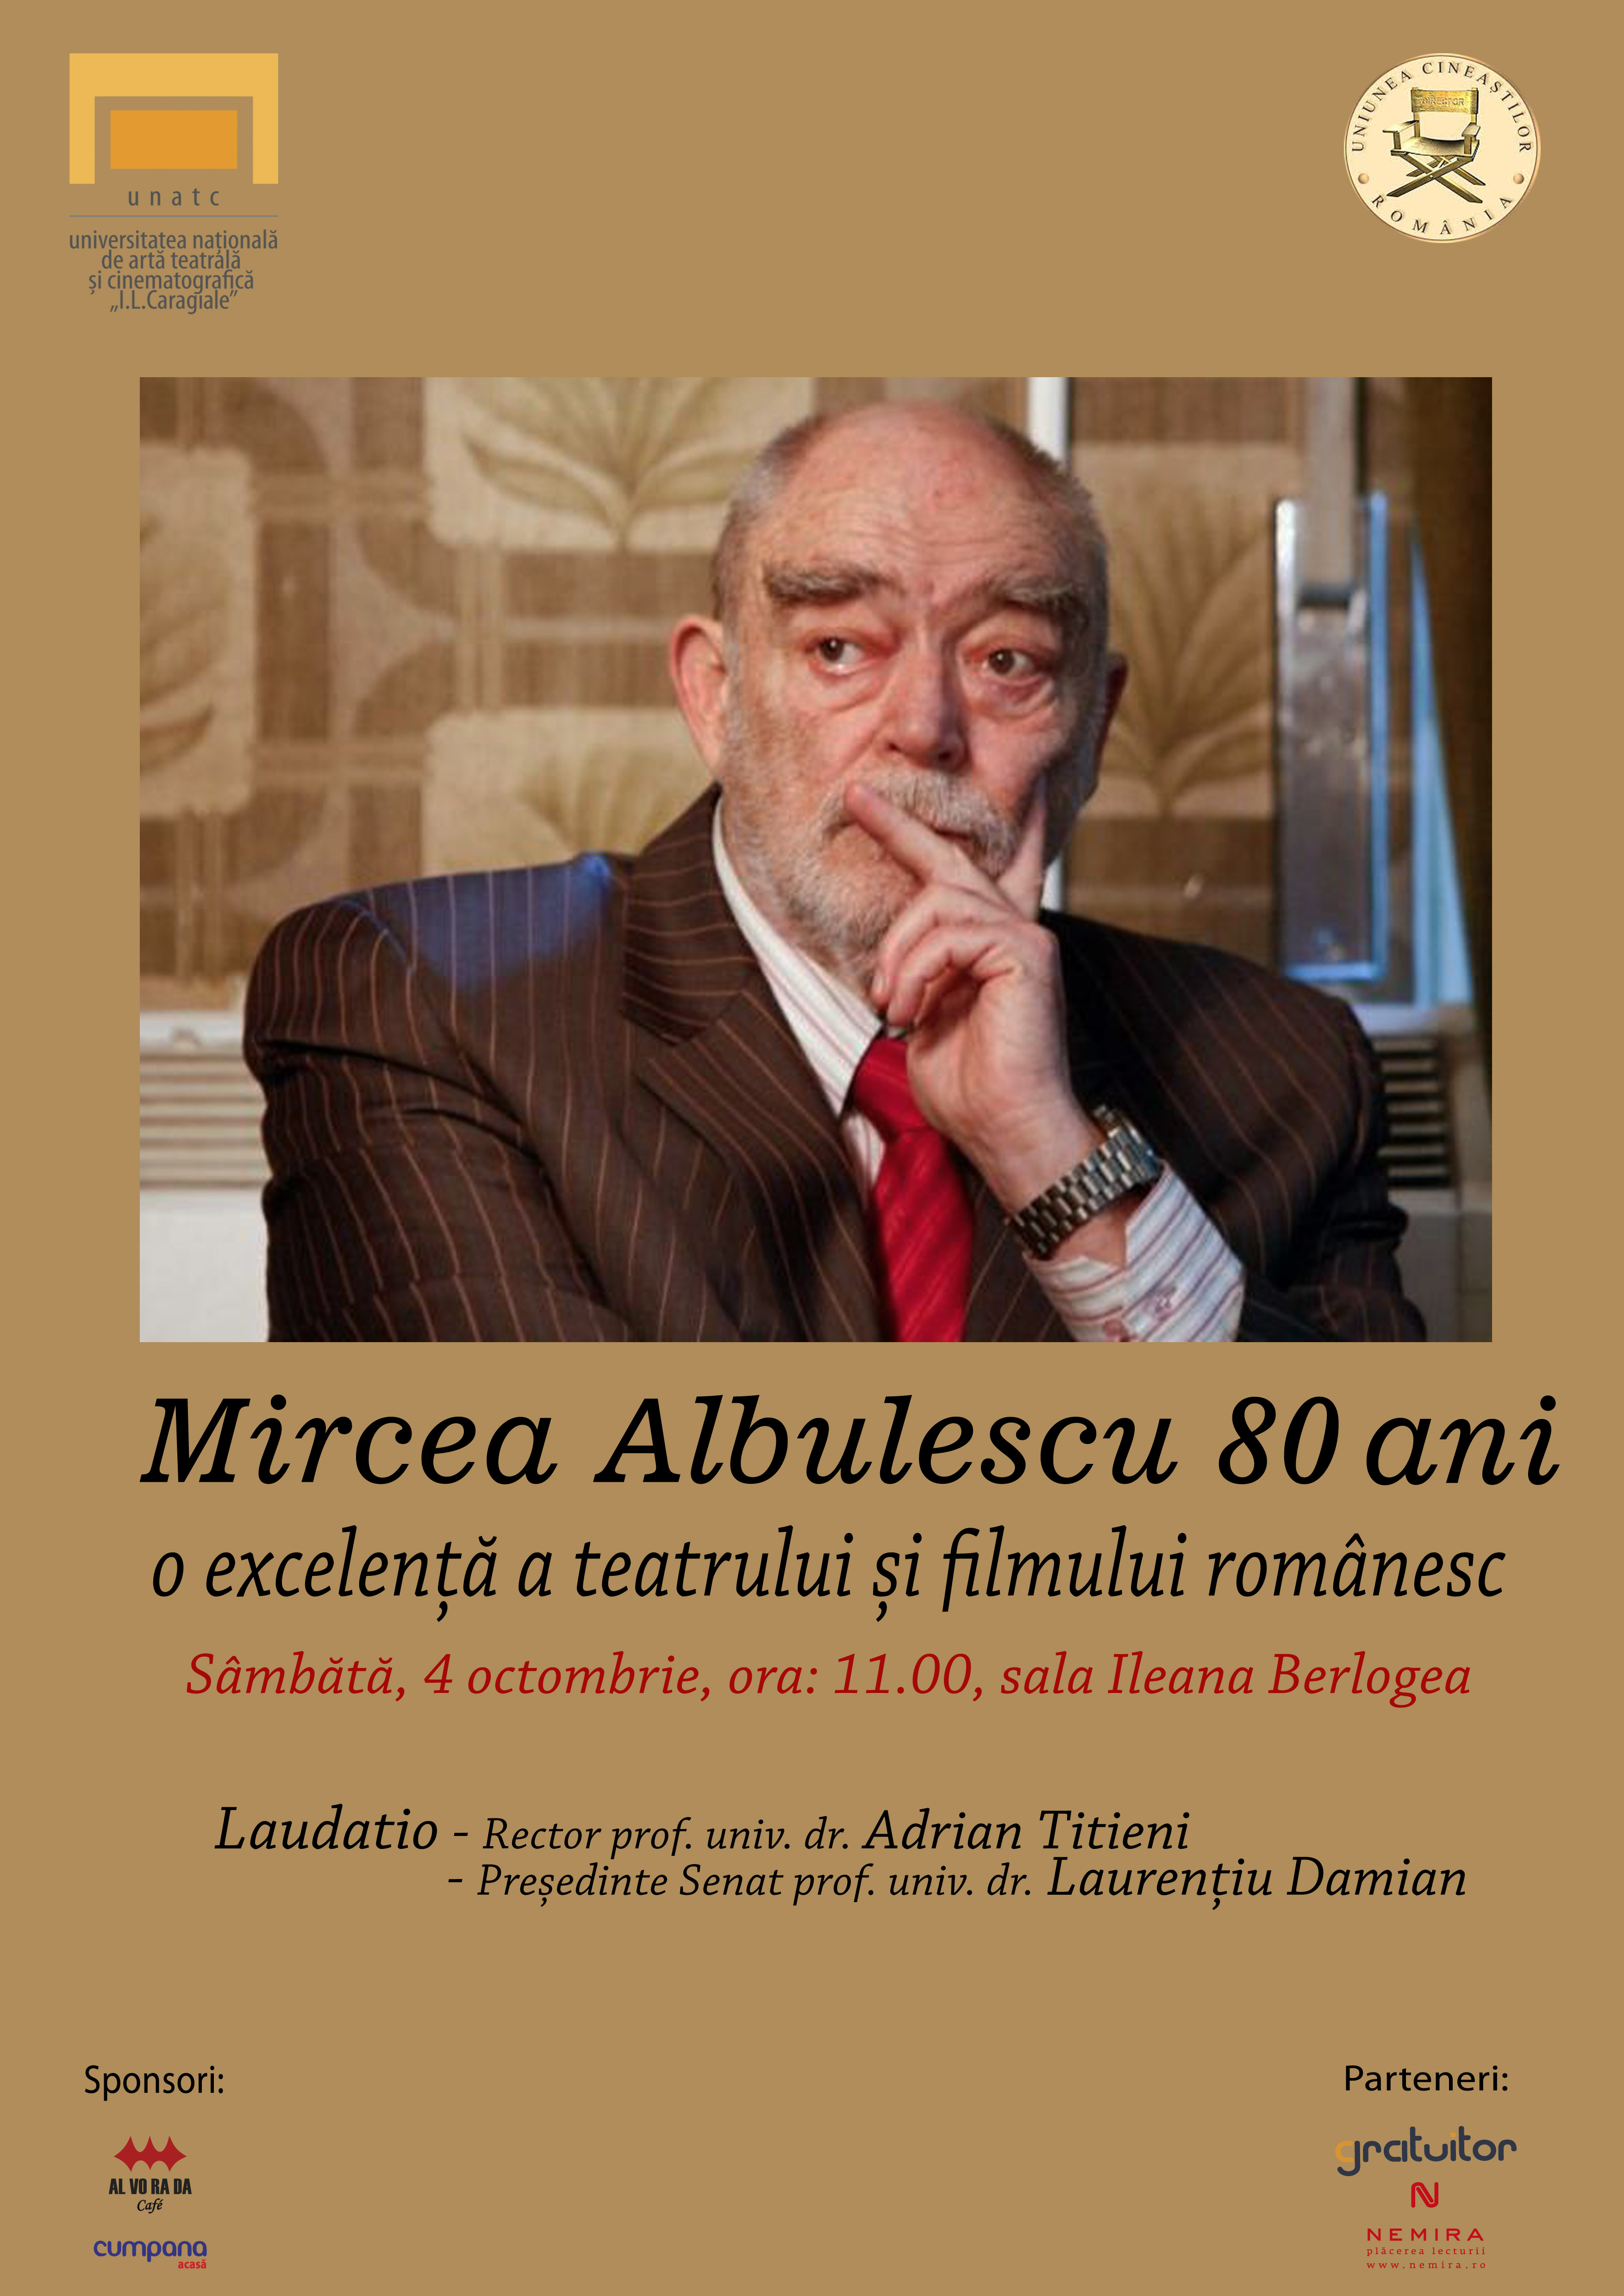 Mircea Albulescu, 80